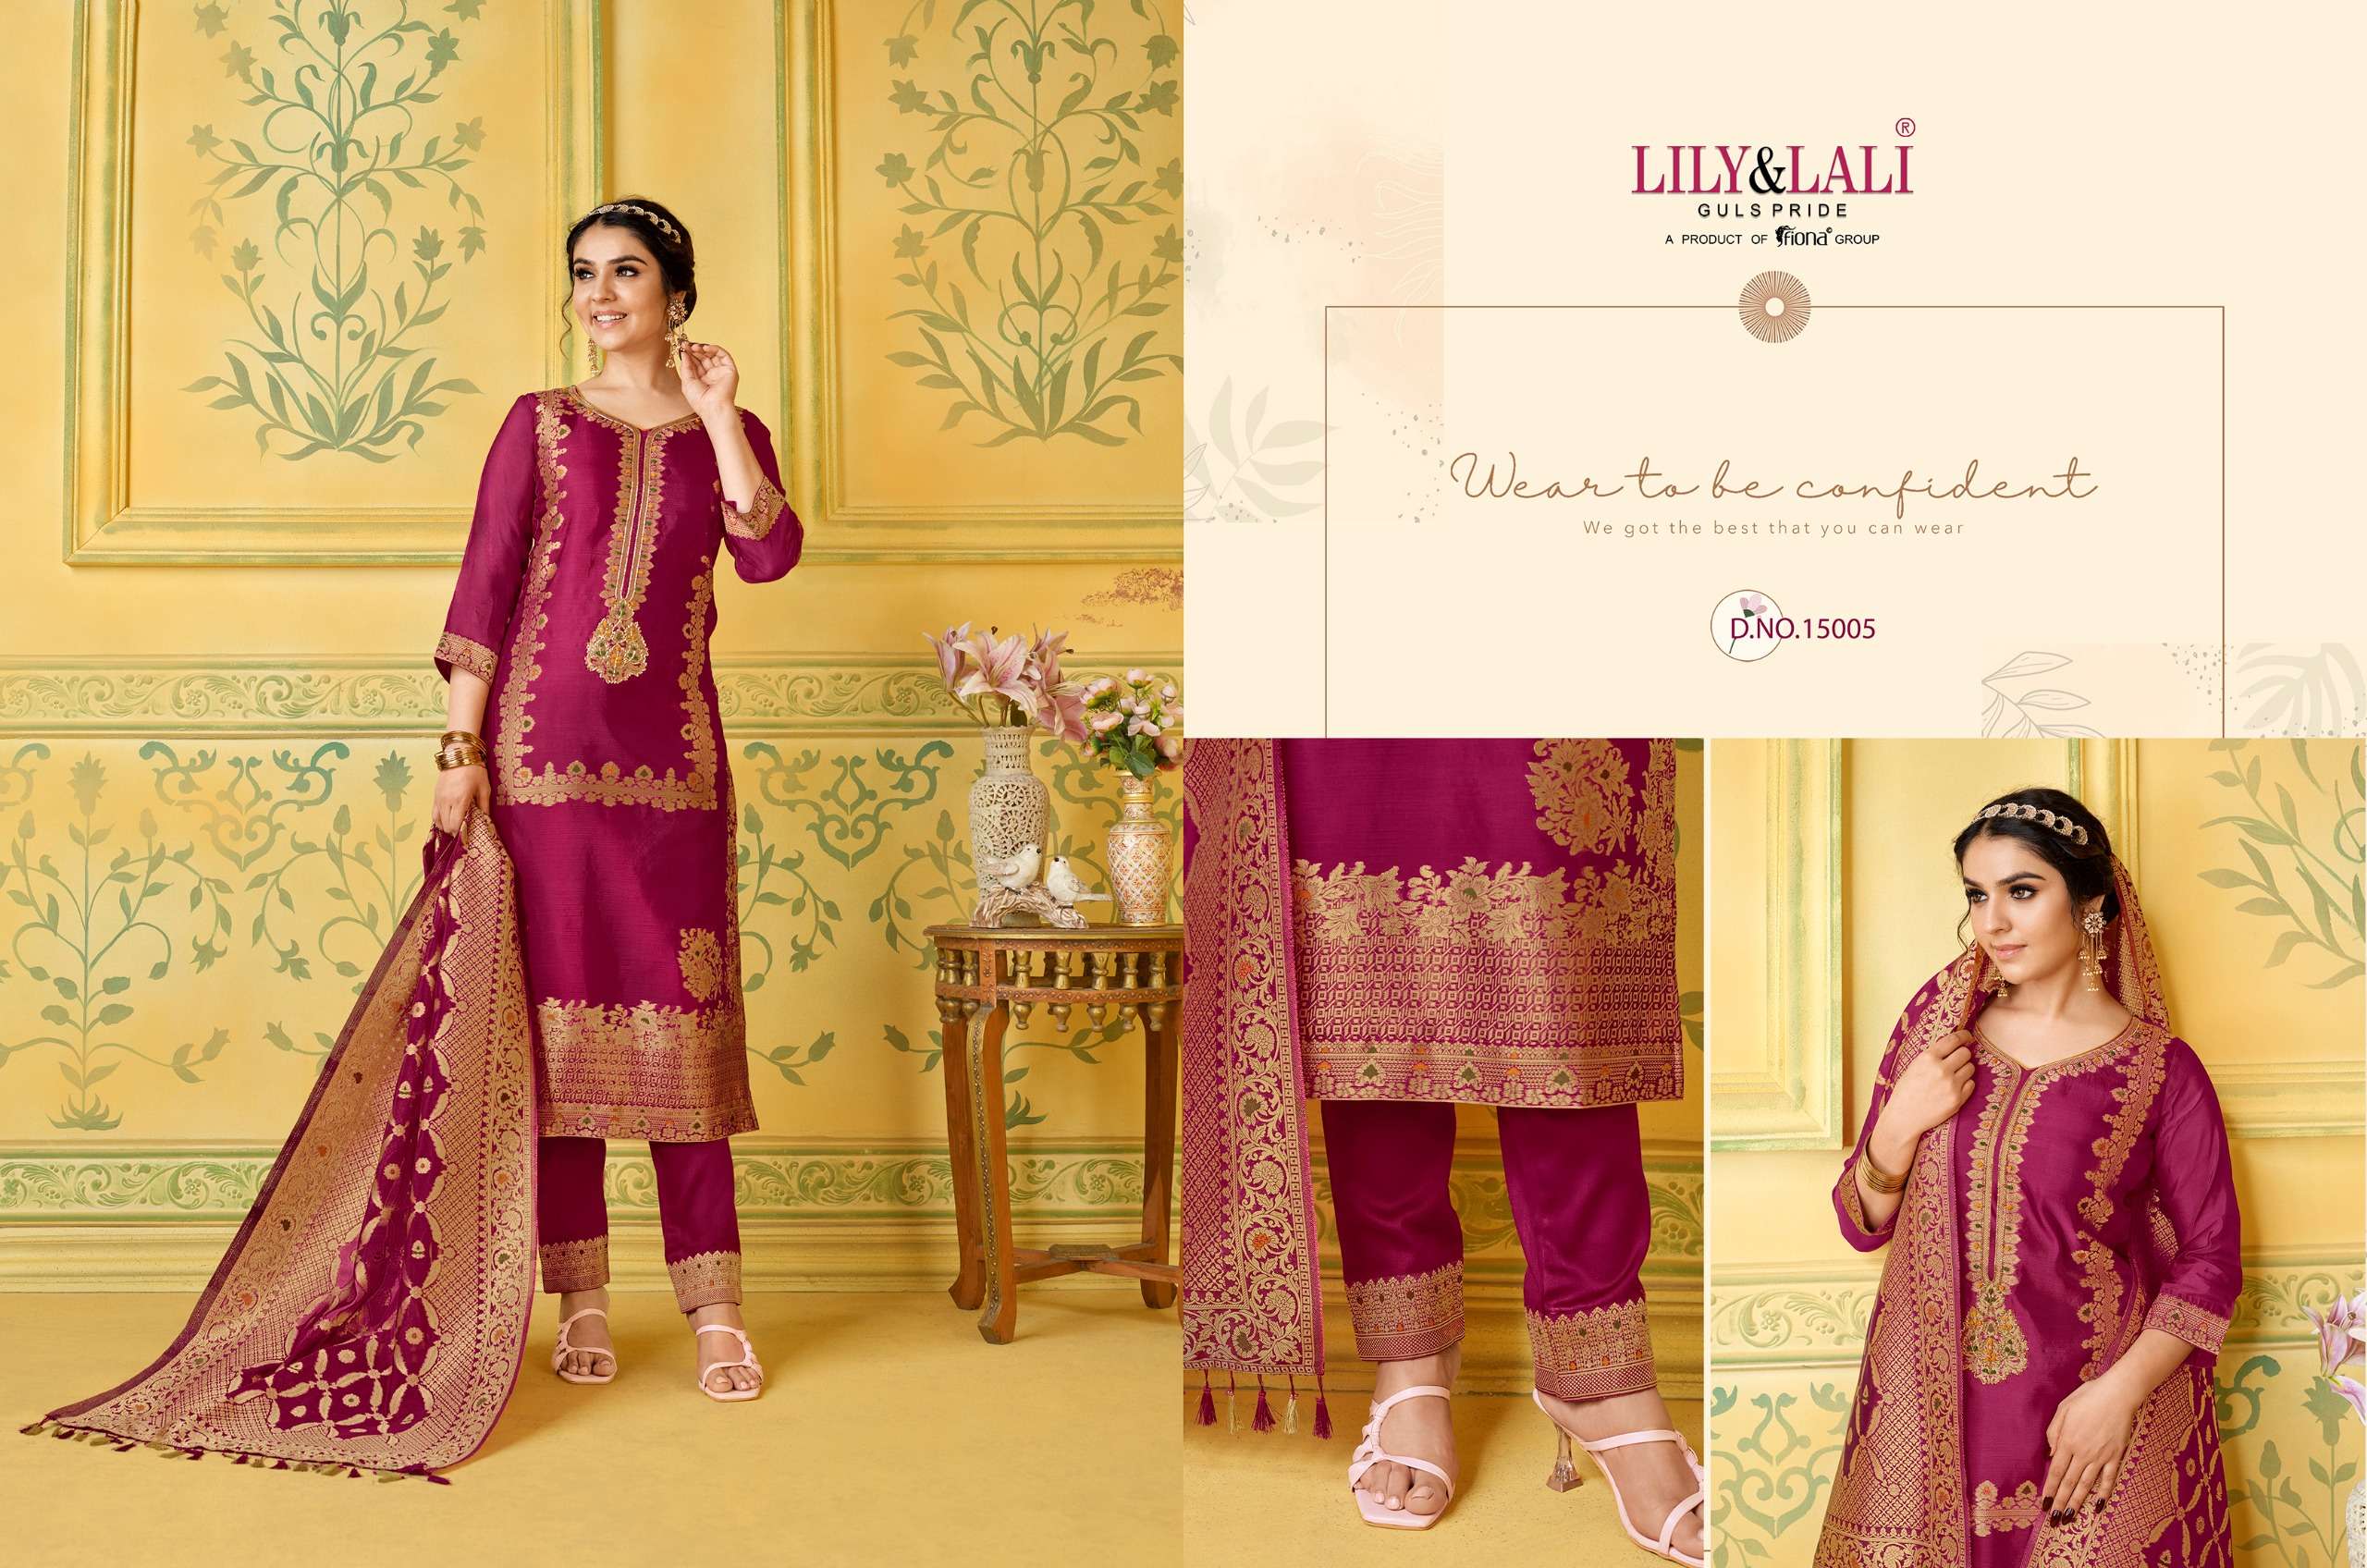 Silkyness Buy Lily Lali Wholesale Online Lowest Price Jacqard Designer Kurta Suit Sets